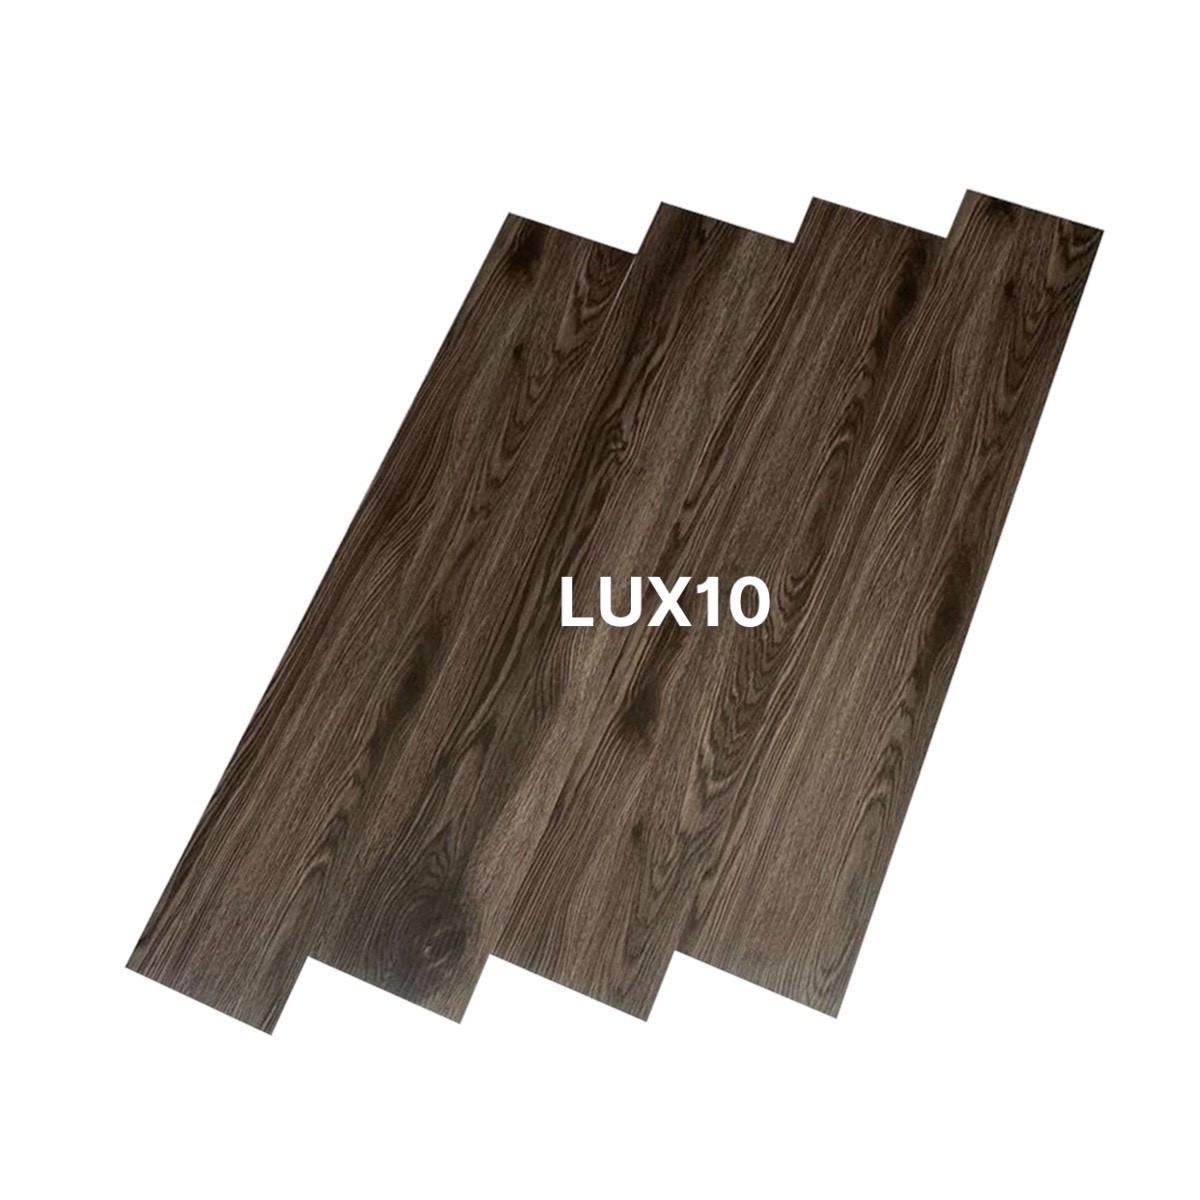 Sàn nhựa dán keo Lux 10